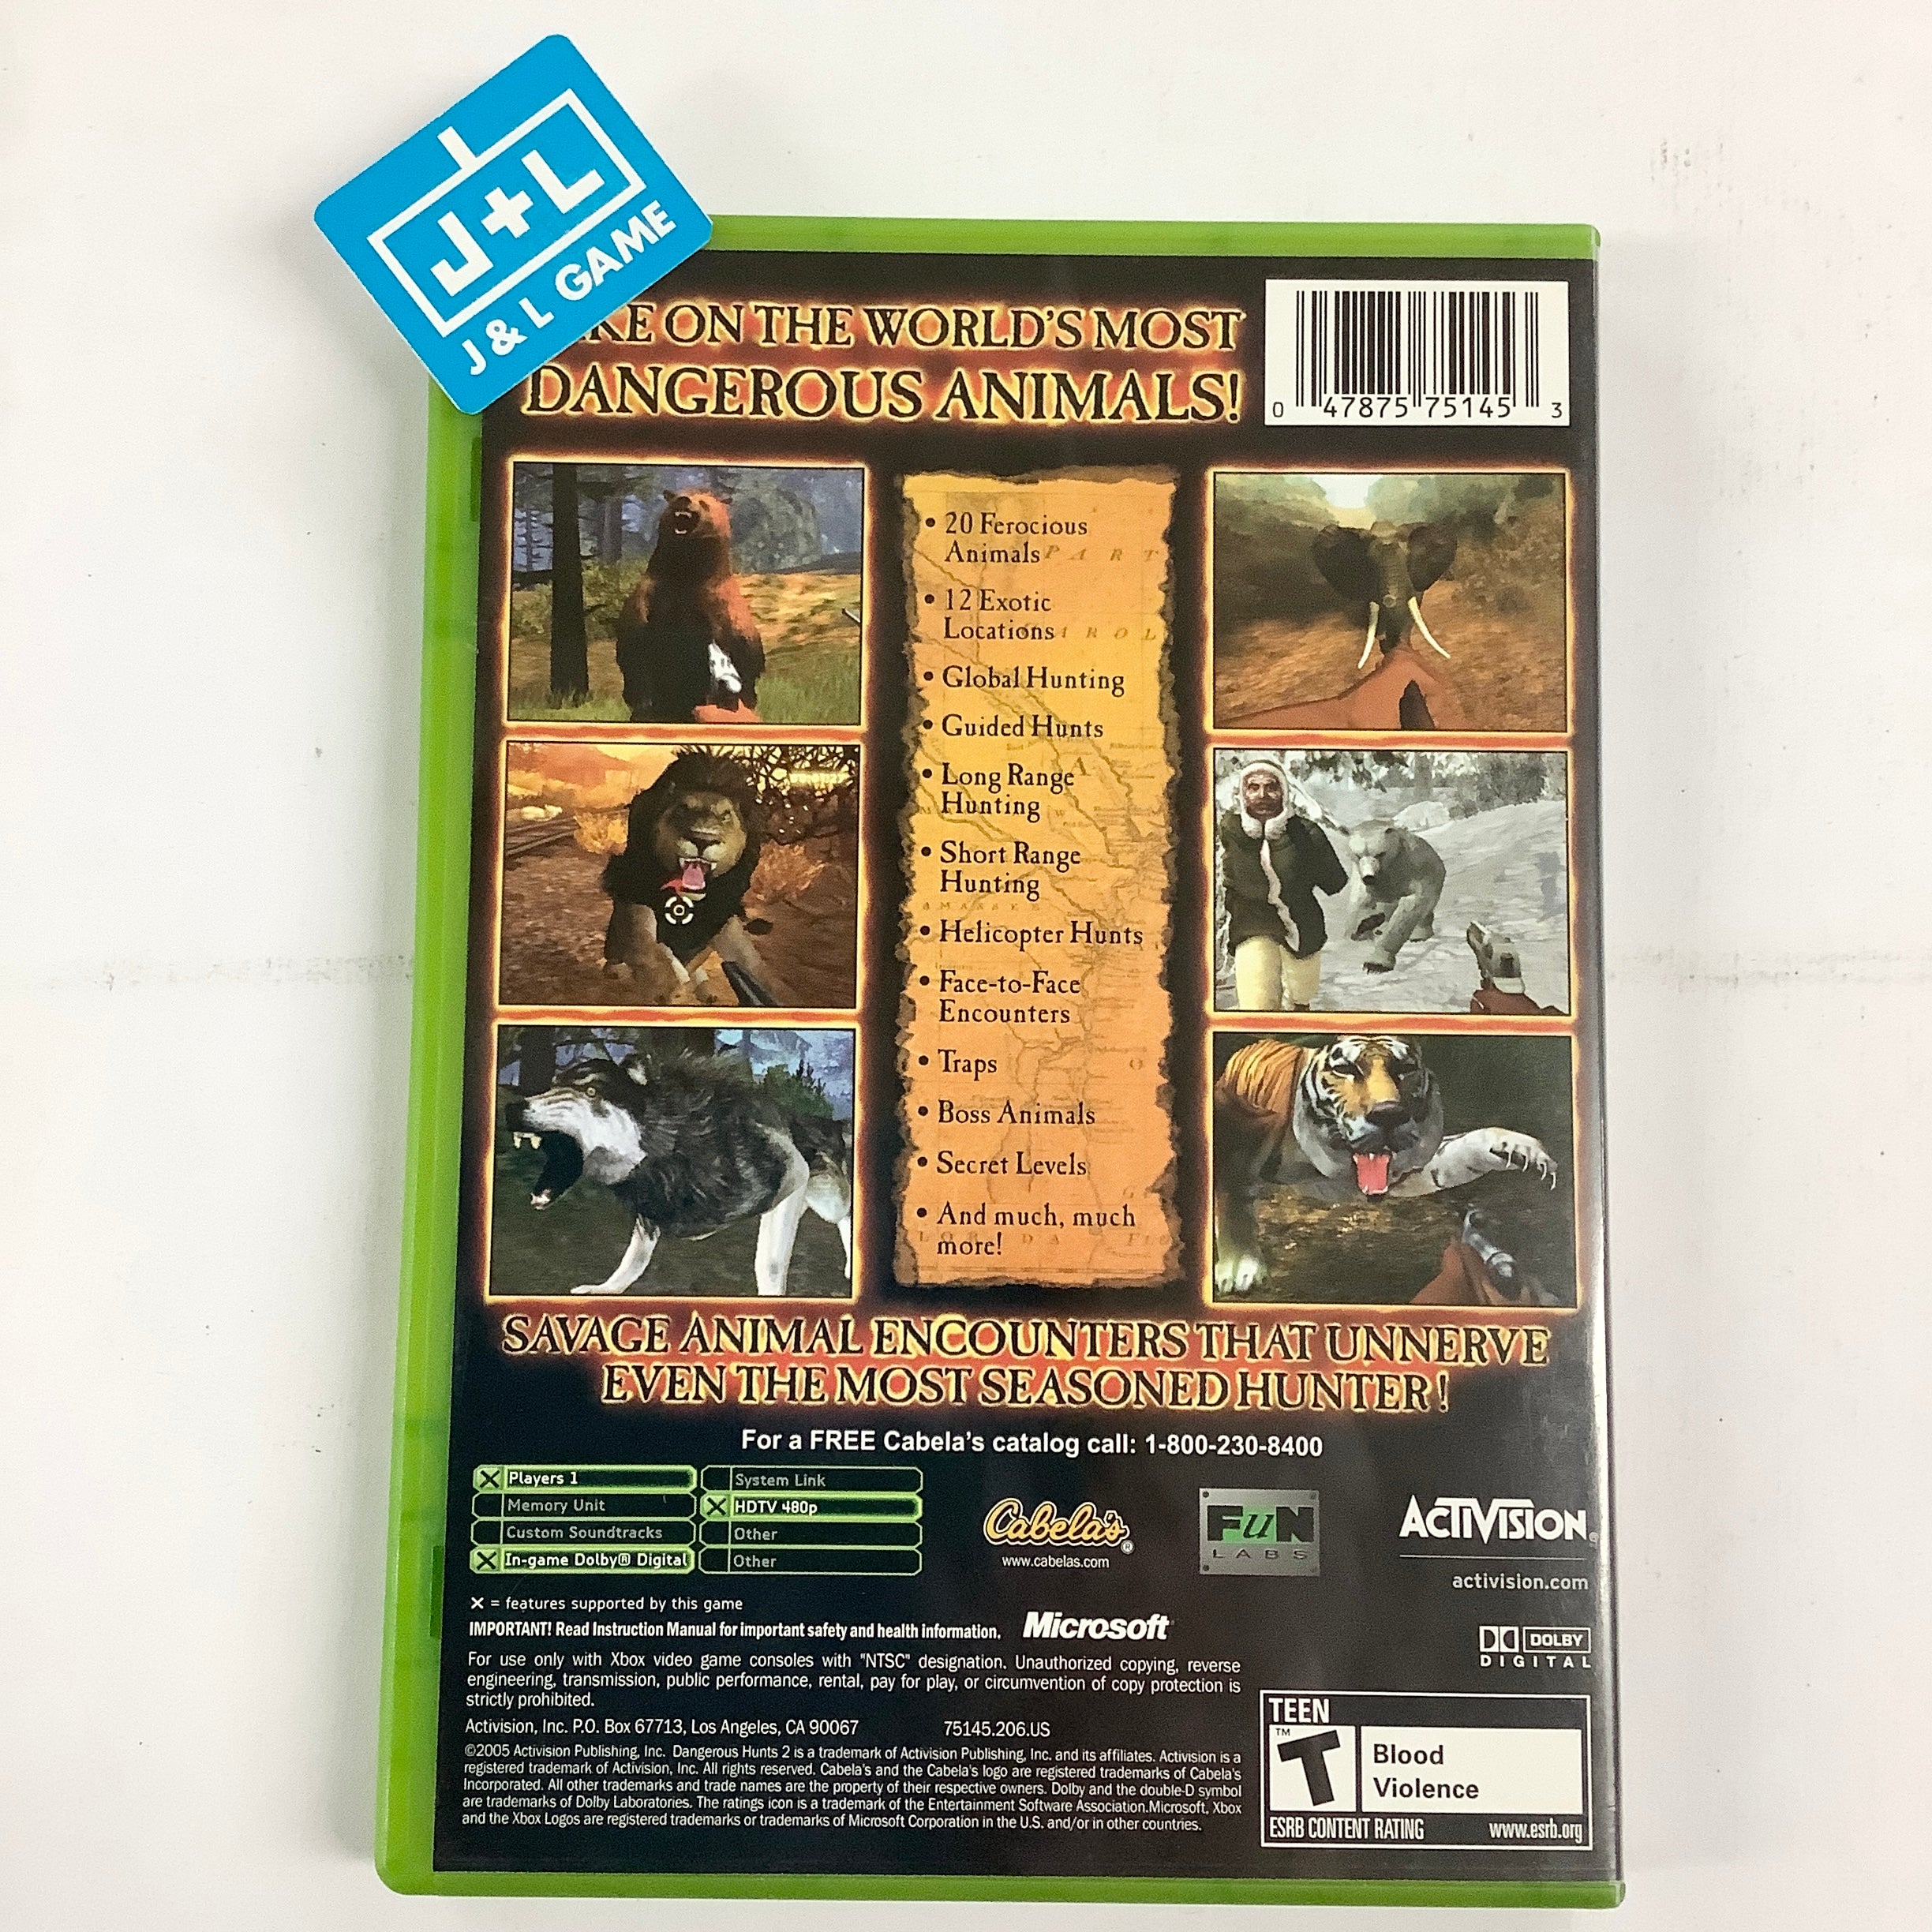 Cabela's Dangerous Hunts 2 - (XB) Xbox [Pre-Owned] Video Games Activision   